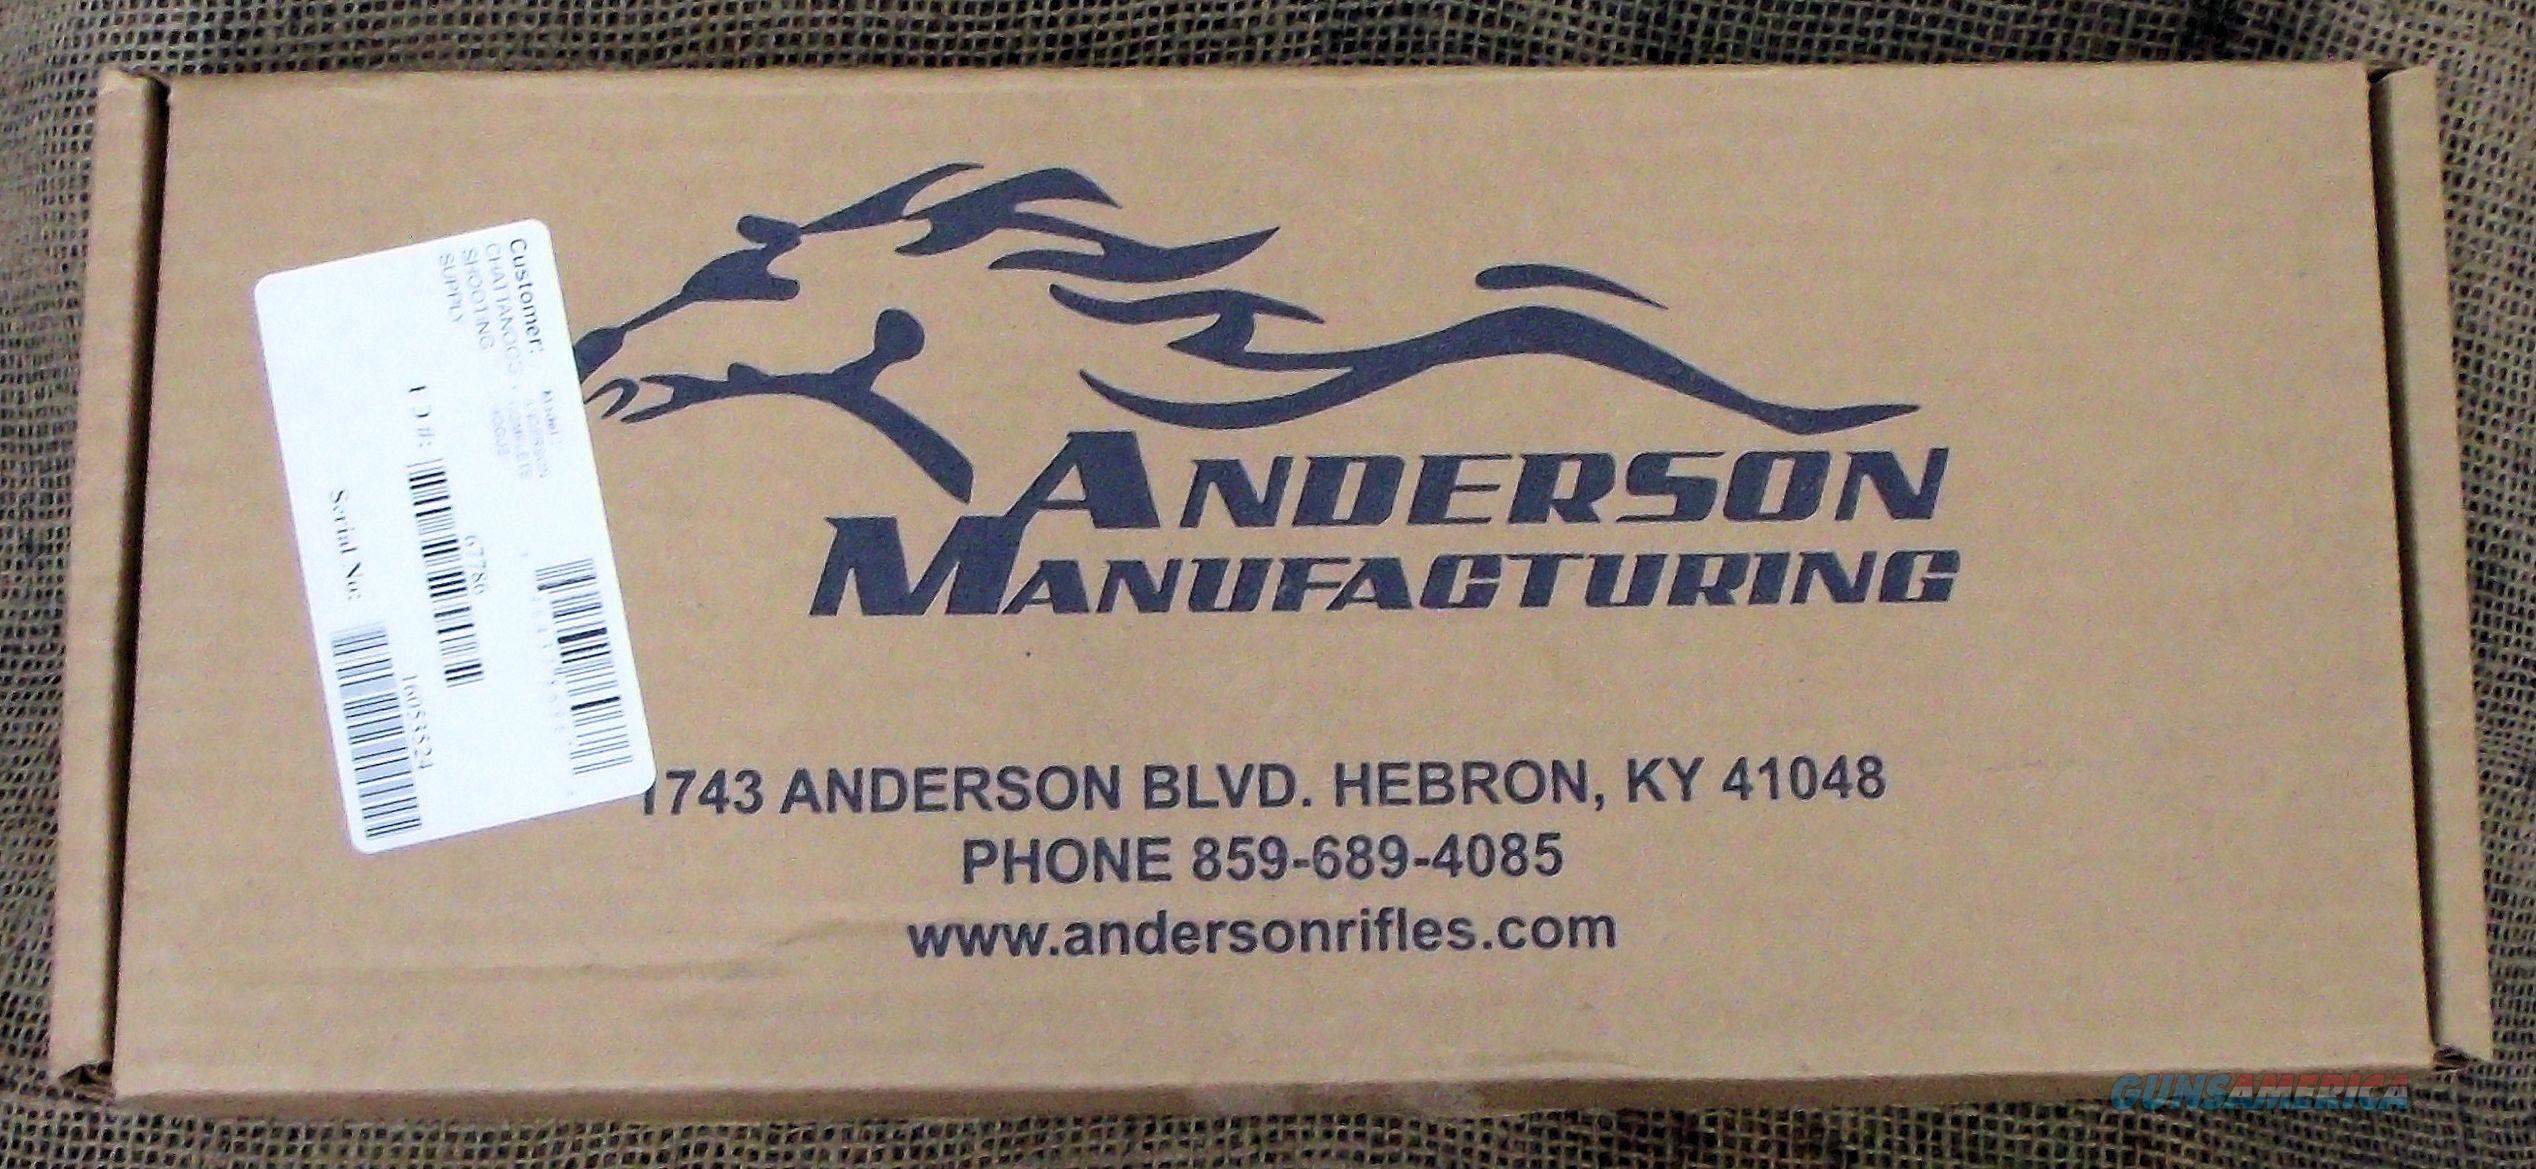 Anderson rifle coupon code Sharkys pasadena coupons